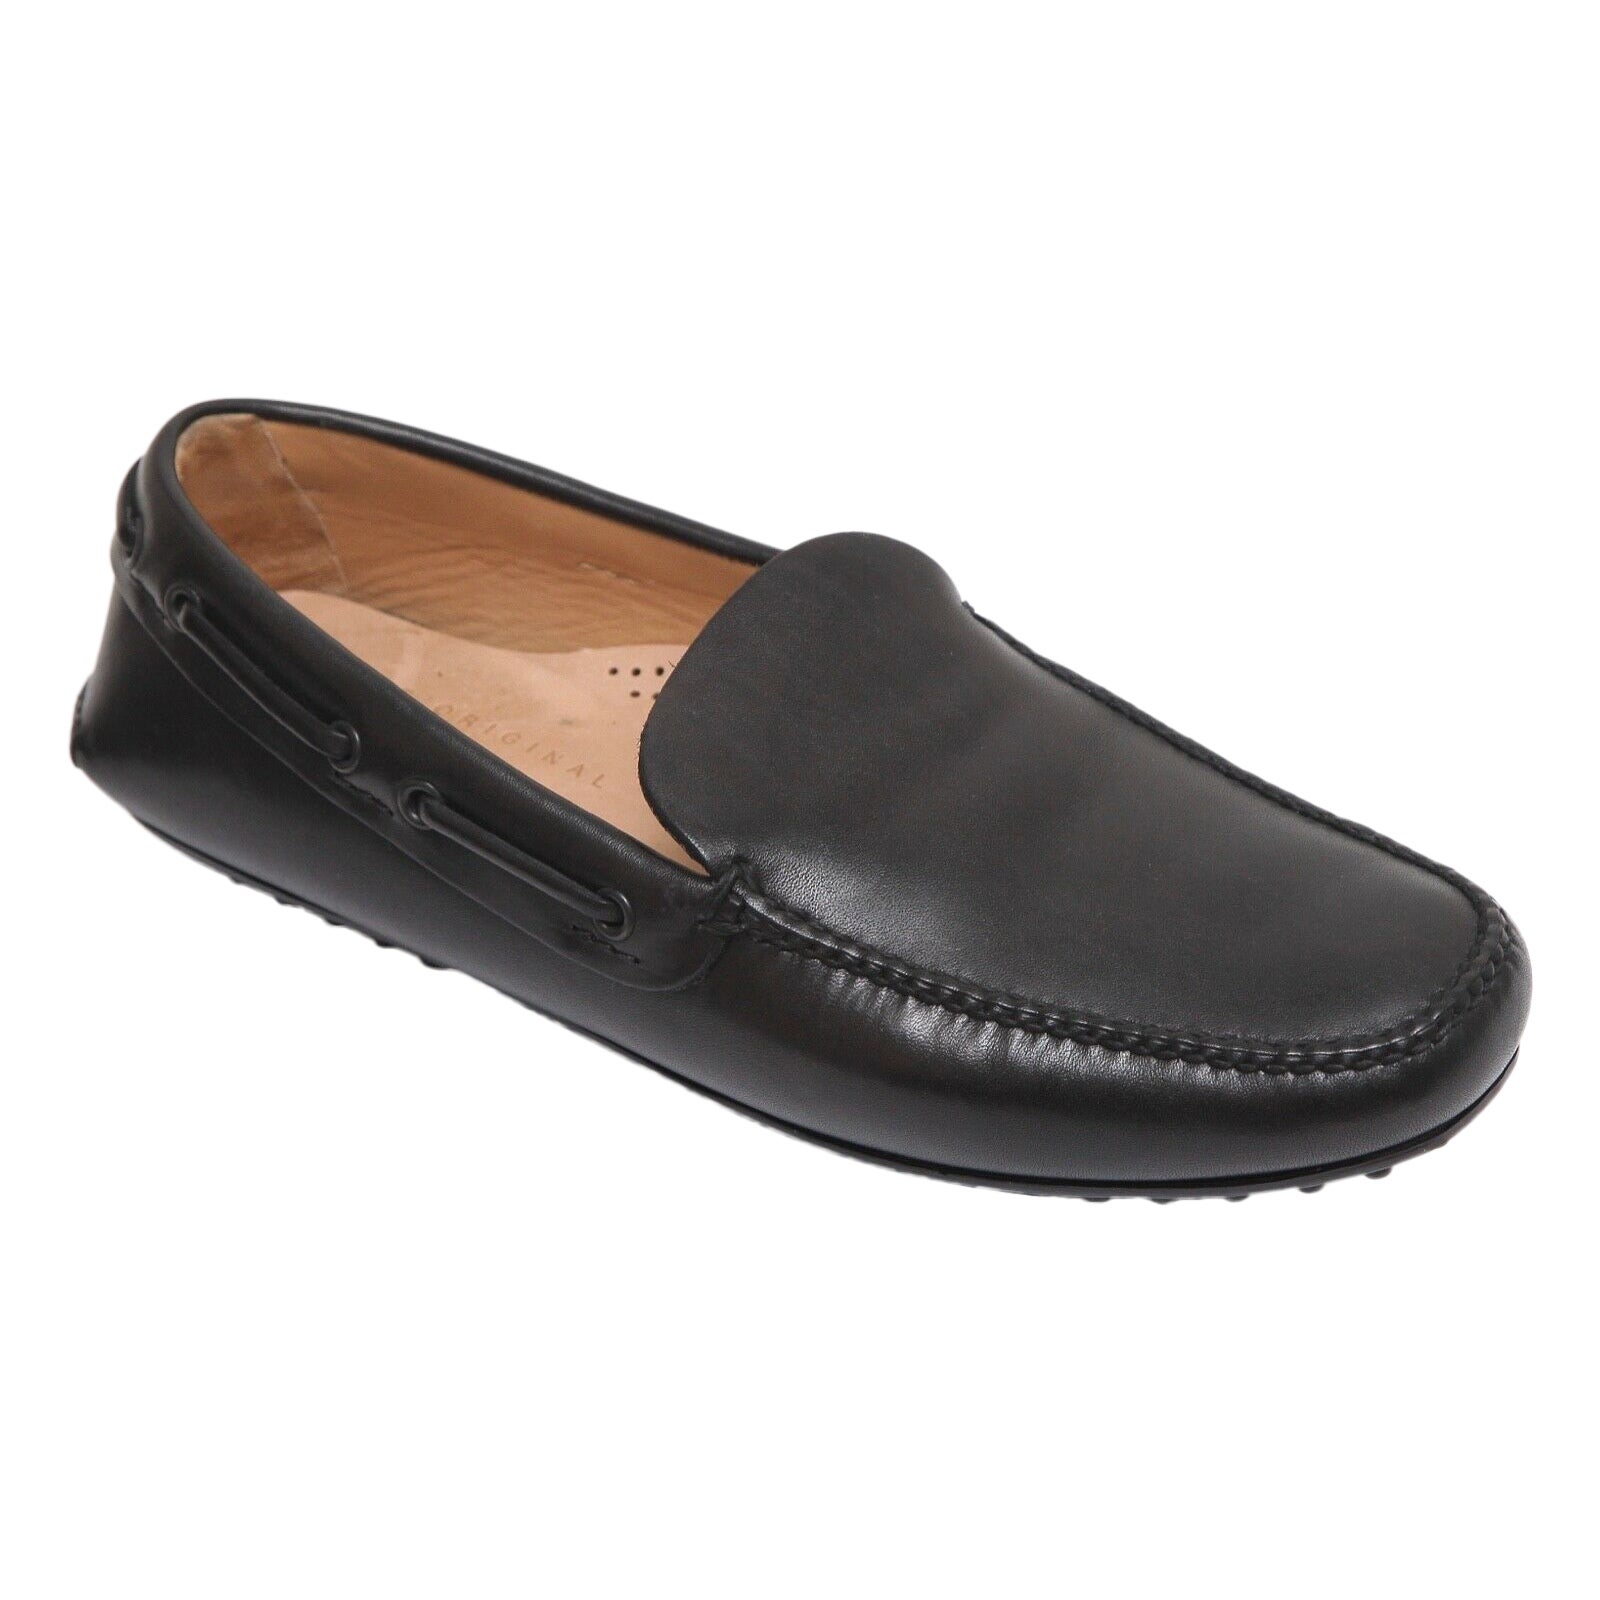 THE ORIGINAL CAR SHOE by PRADA Men's Black Leather Loafer Flats 7 For at | black car shoes, prada shoes men, prada leather